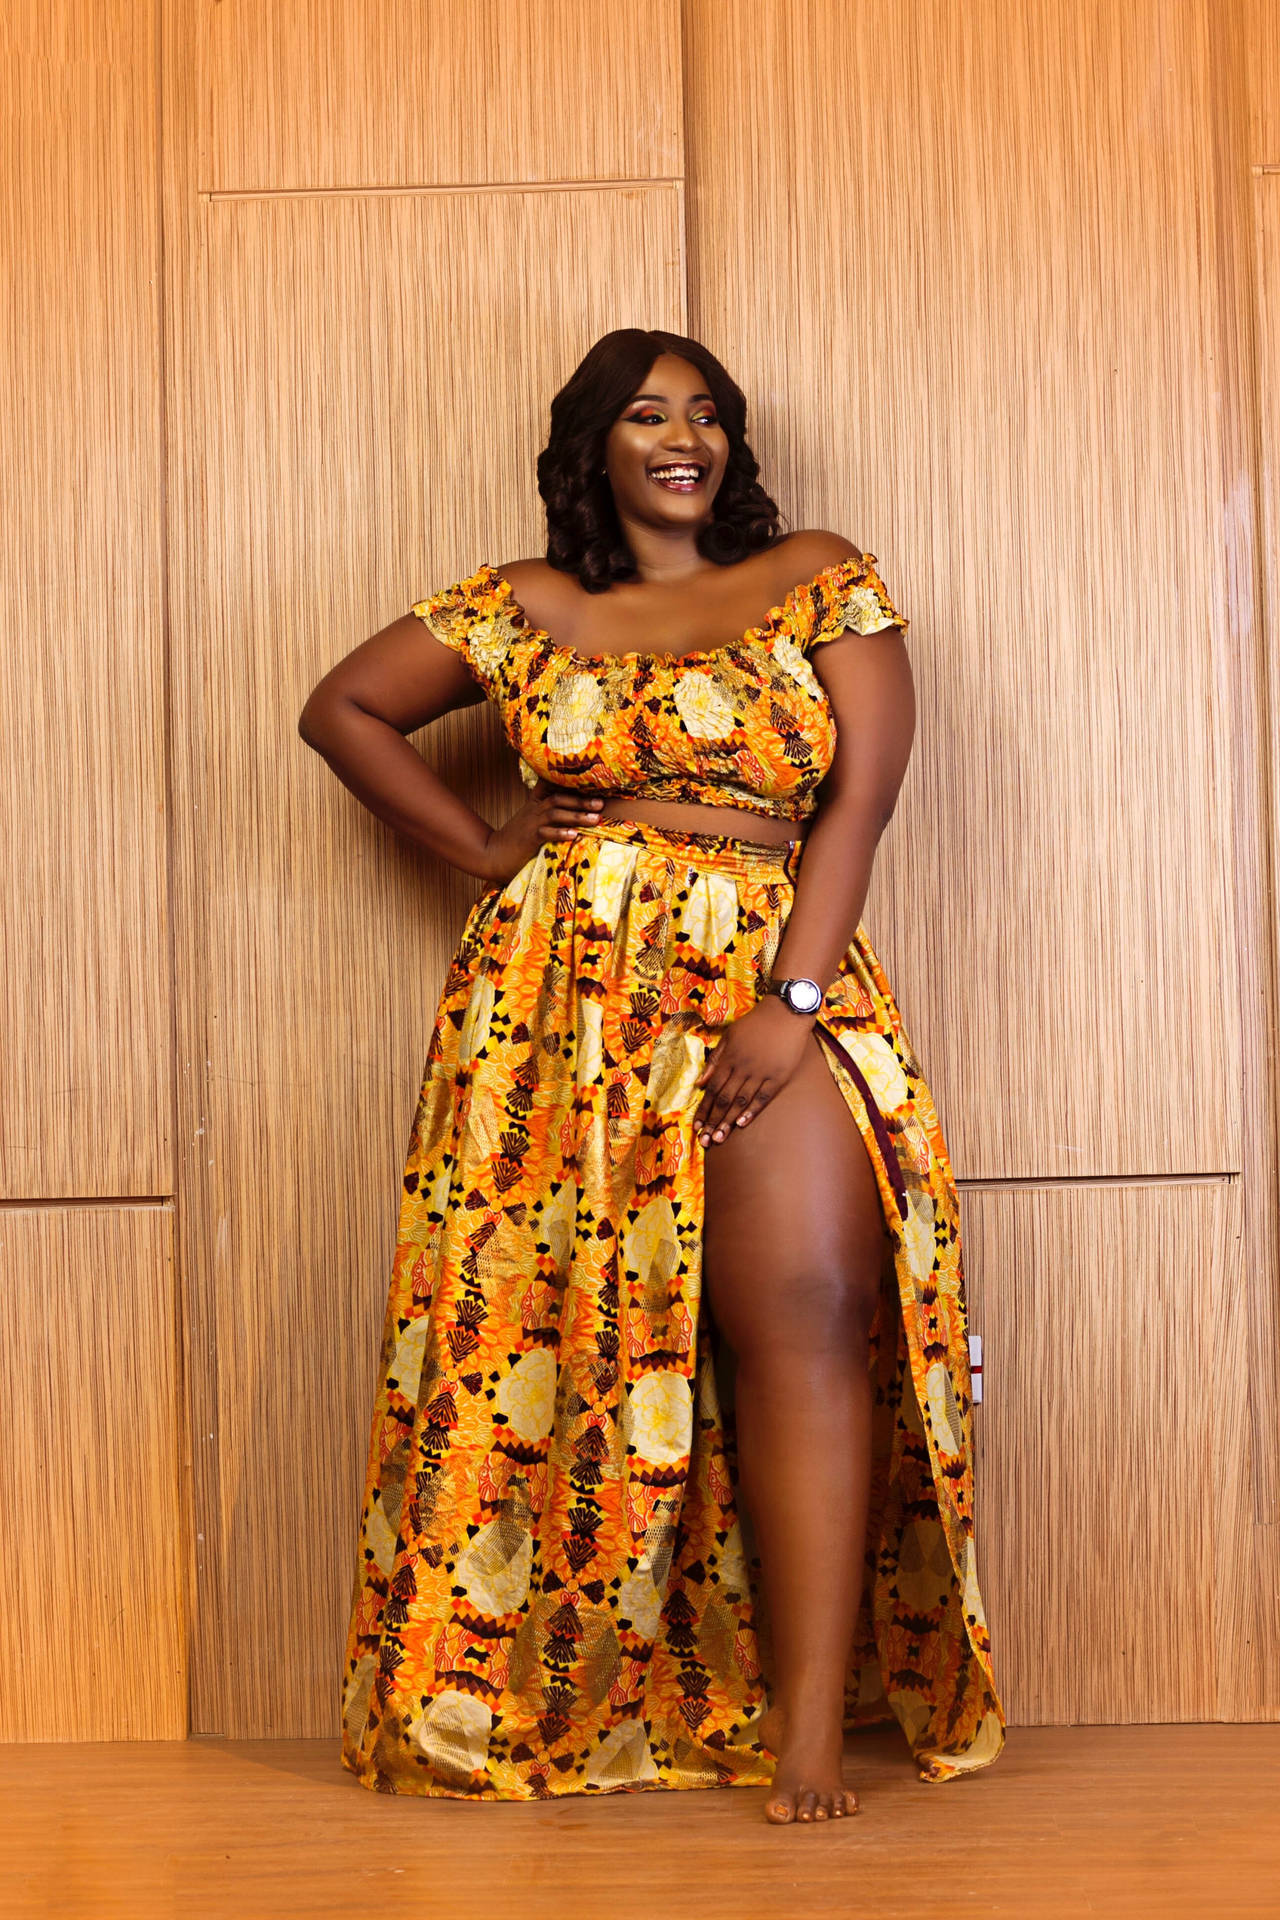 Fat Girl In An African Fashion Trend Dress Wallpaper